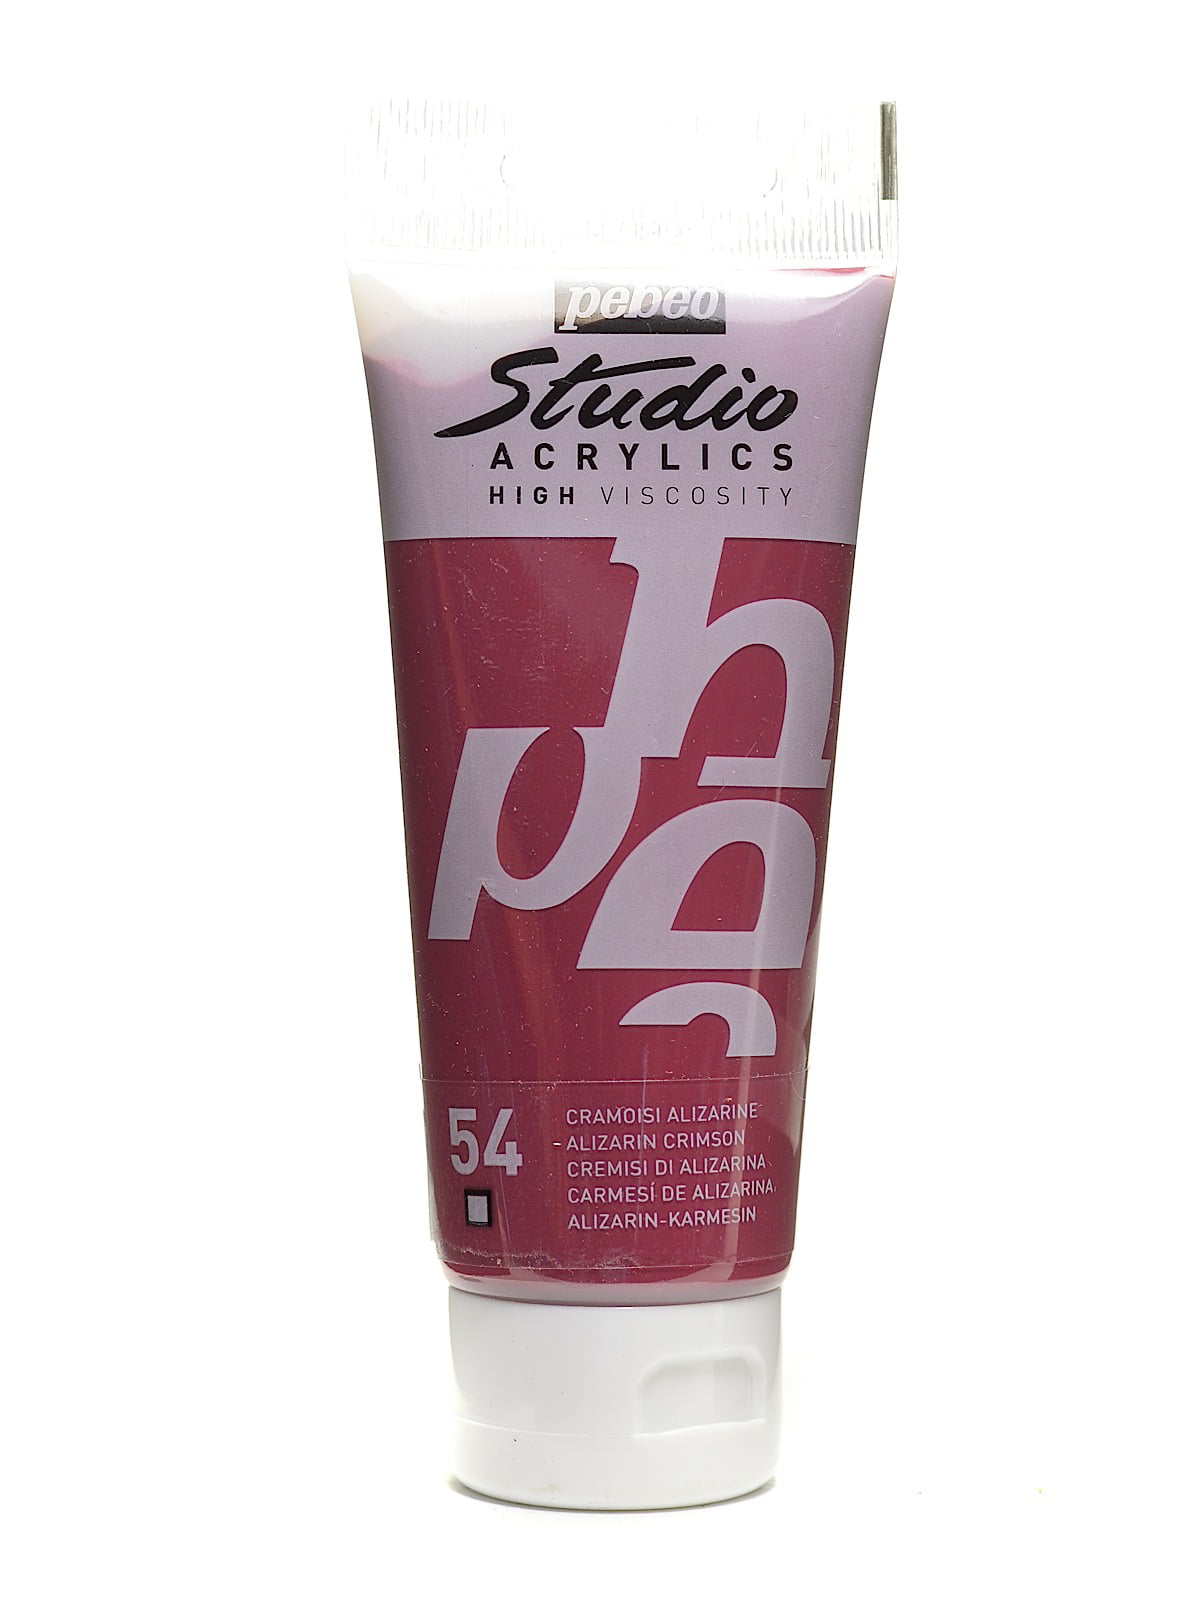 Studio Acrylic Paint azo pink, 100 ml (pack of 3)